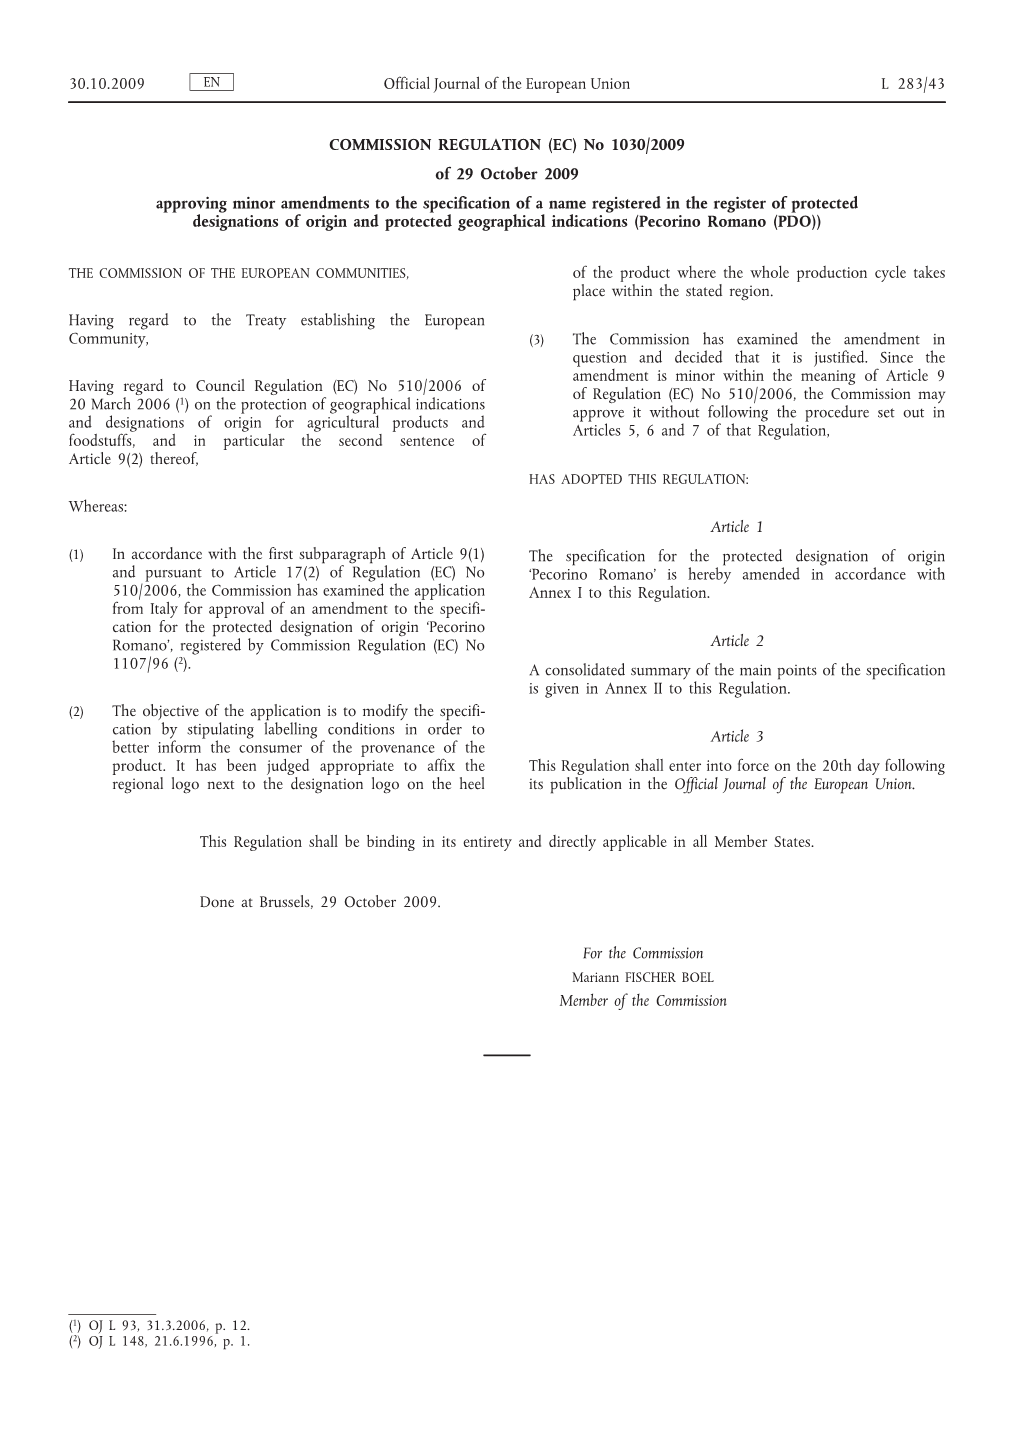 Commission Regulation (EC) No 1030/2009